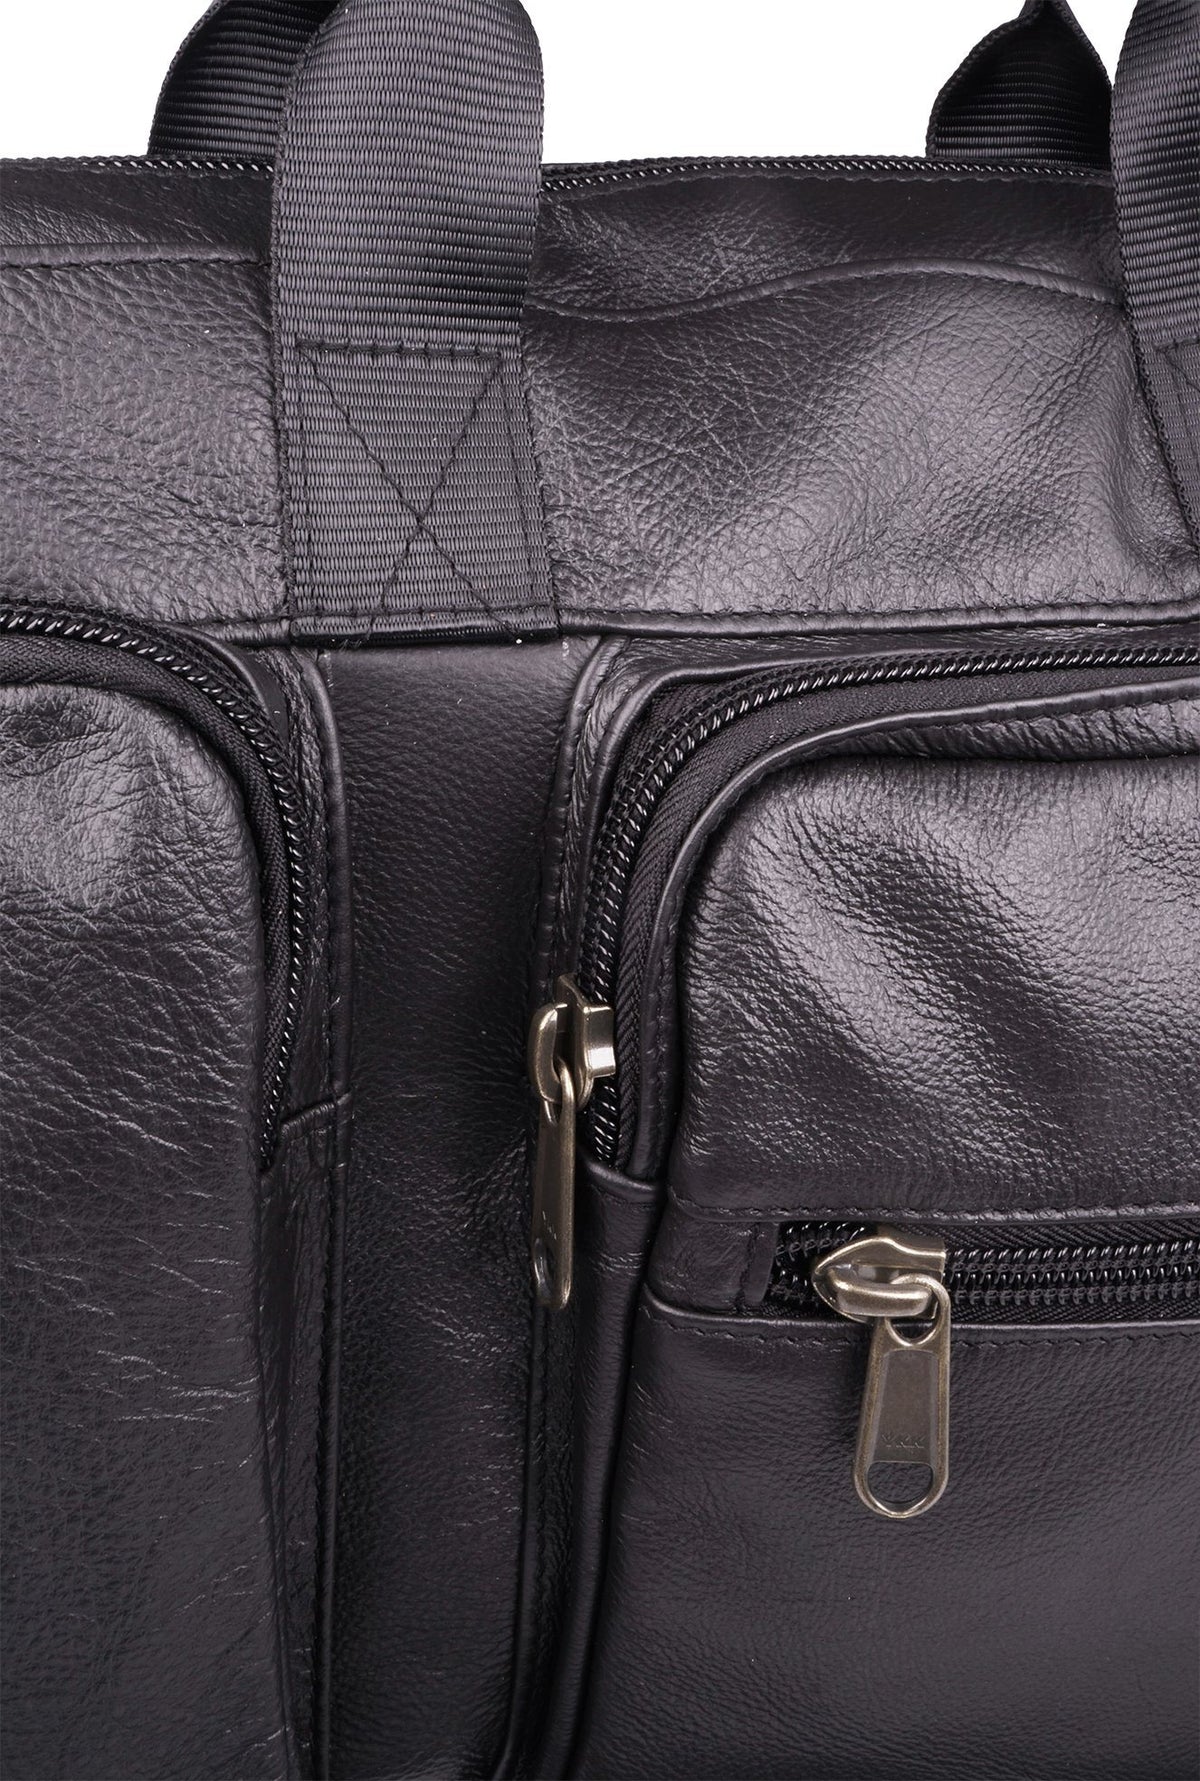 Essentials Brief - 15inch Leather Laptop Bag Work CHAPEL 